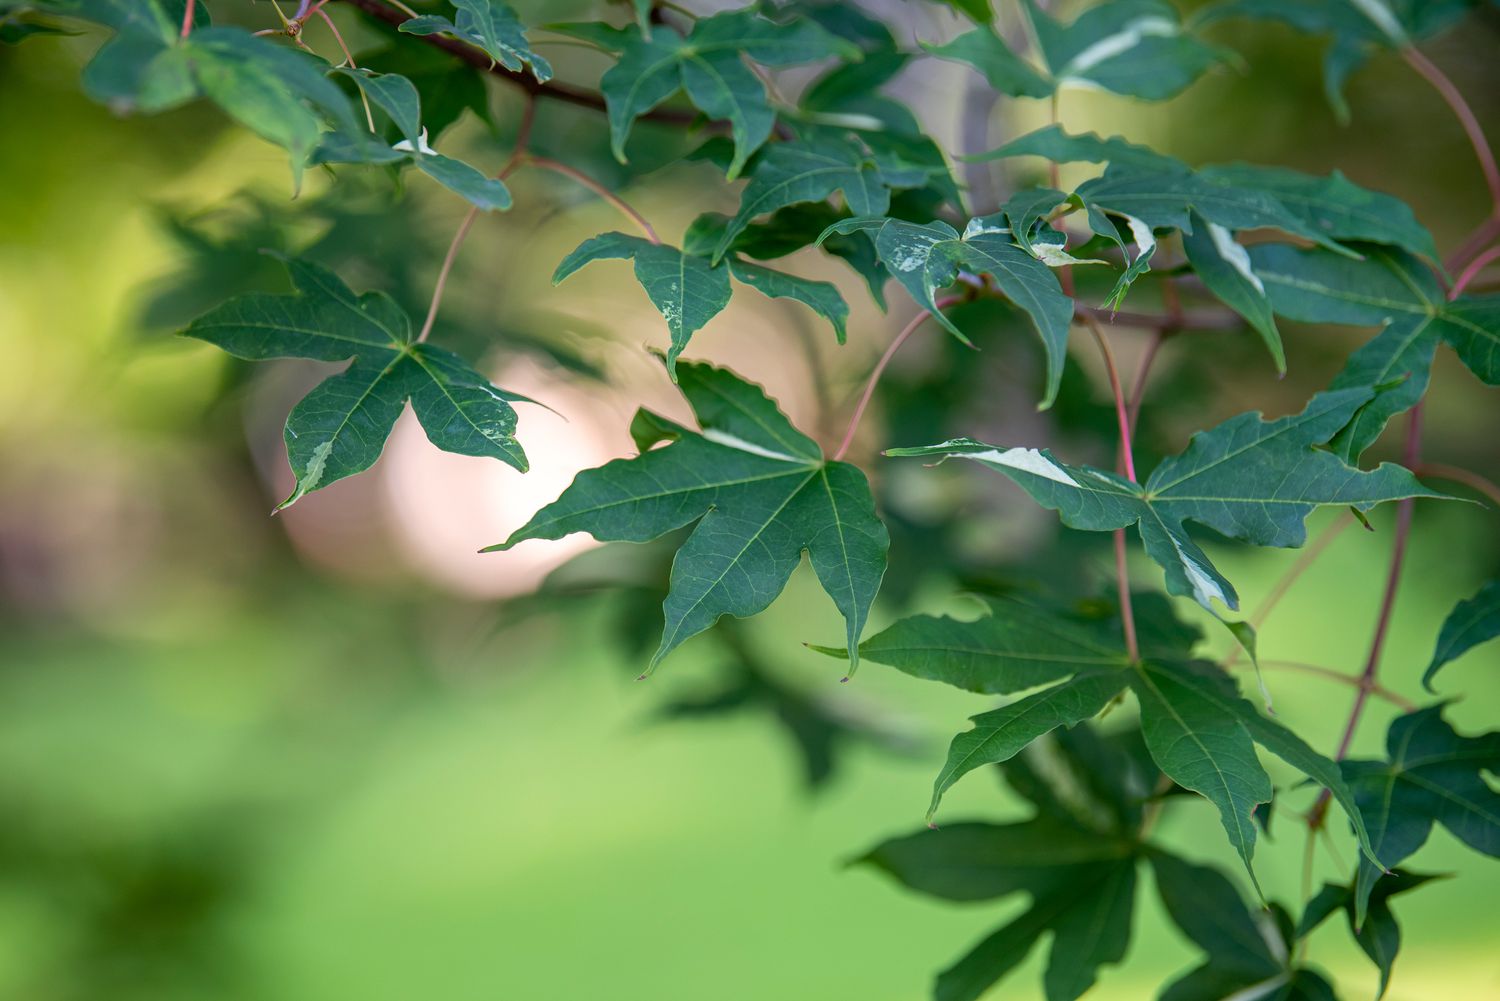 Zweig des Shantung-Ahorns mit dunkelgrünen sternförmigen Blättern